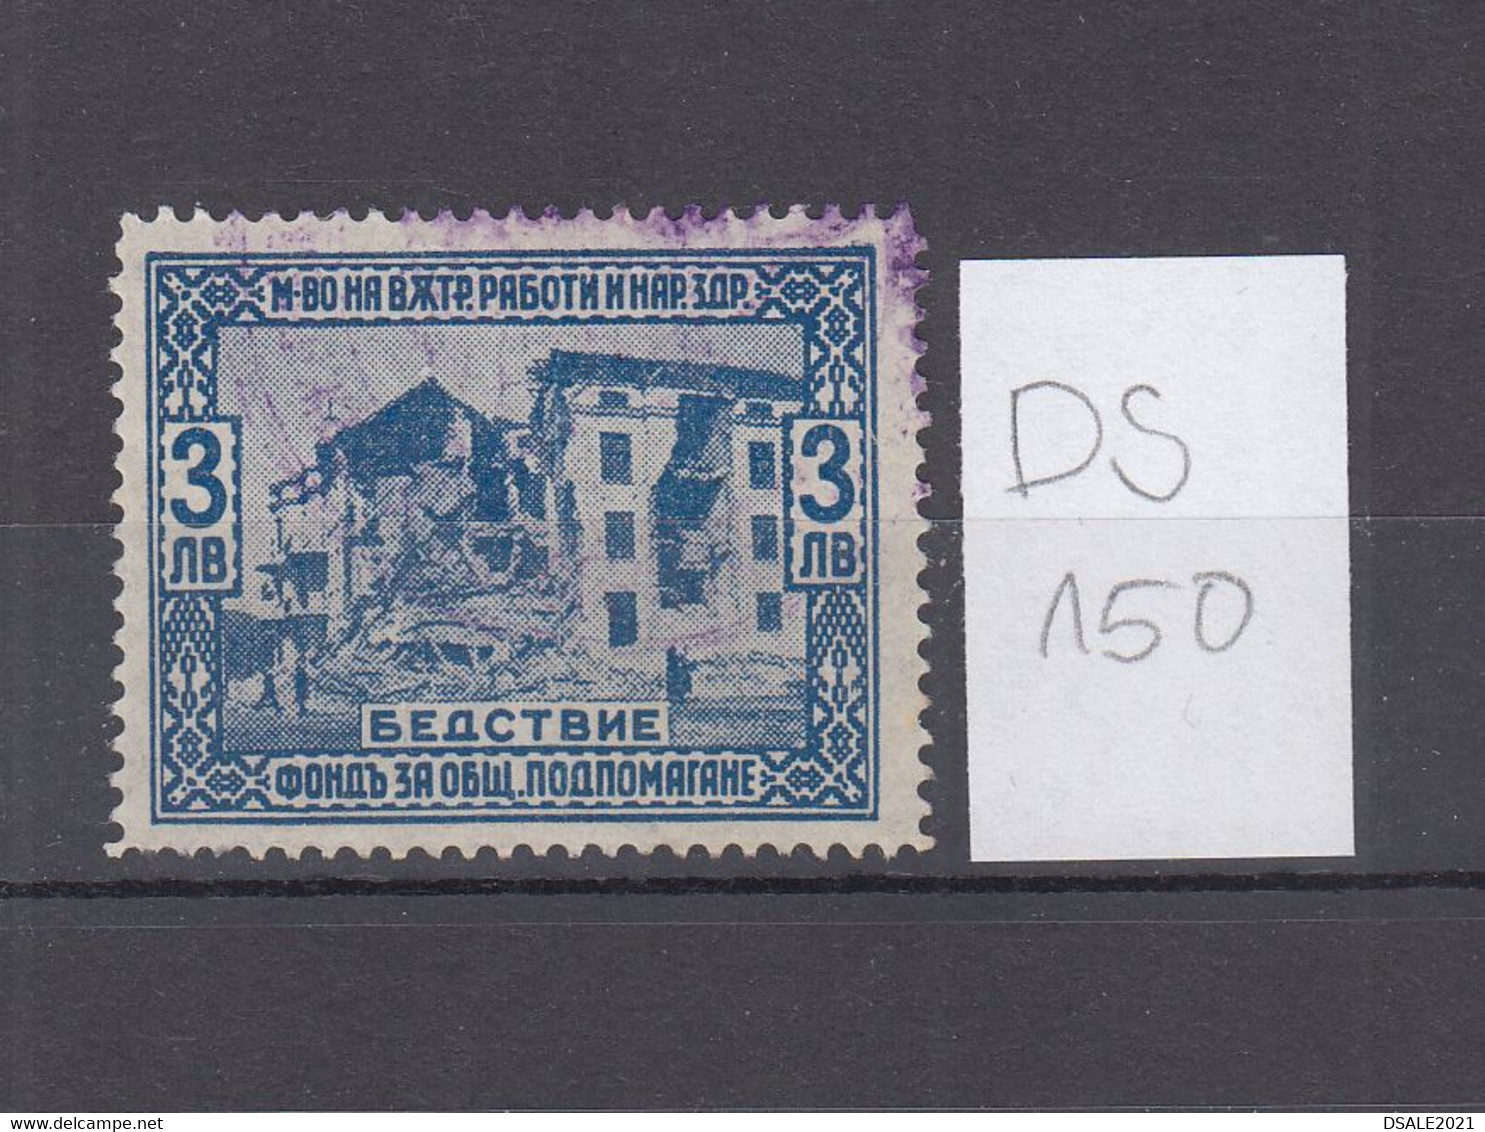 Bulgaria Bulgarie Bulgarije 1930s Disaster Fund 3Lv. Fiscal Revenue Stamp Bulgarian Revenues (ds150) - Dienstmarken